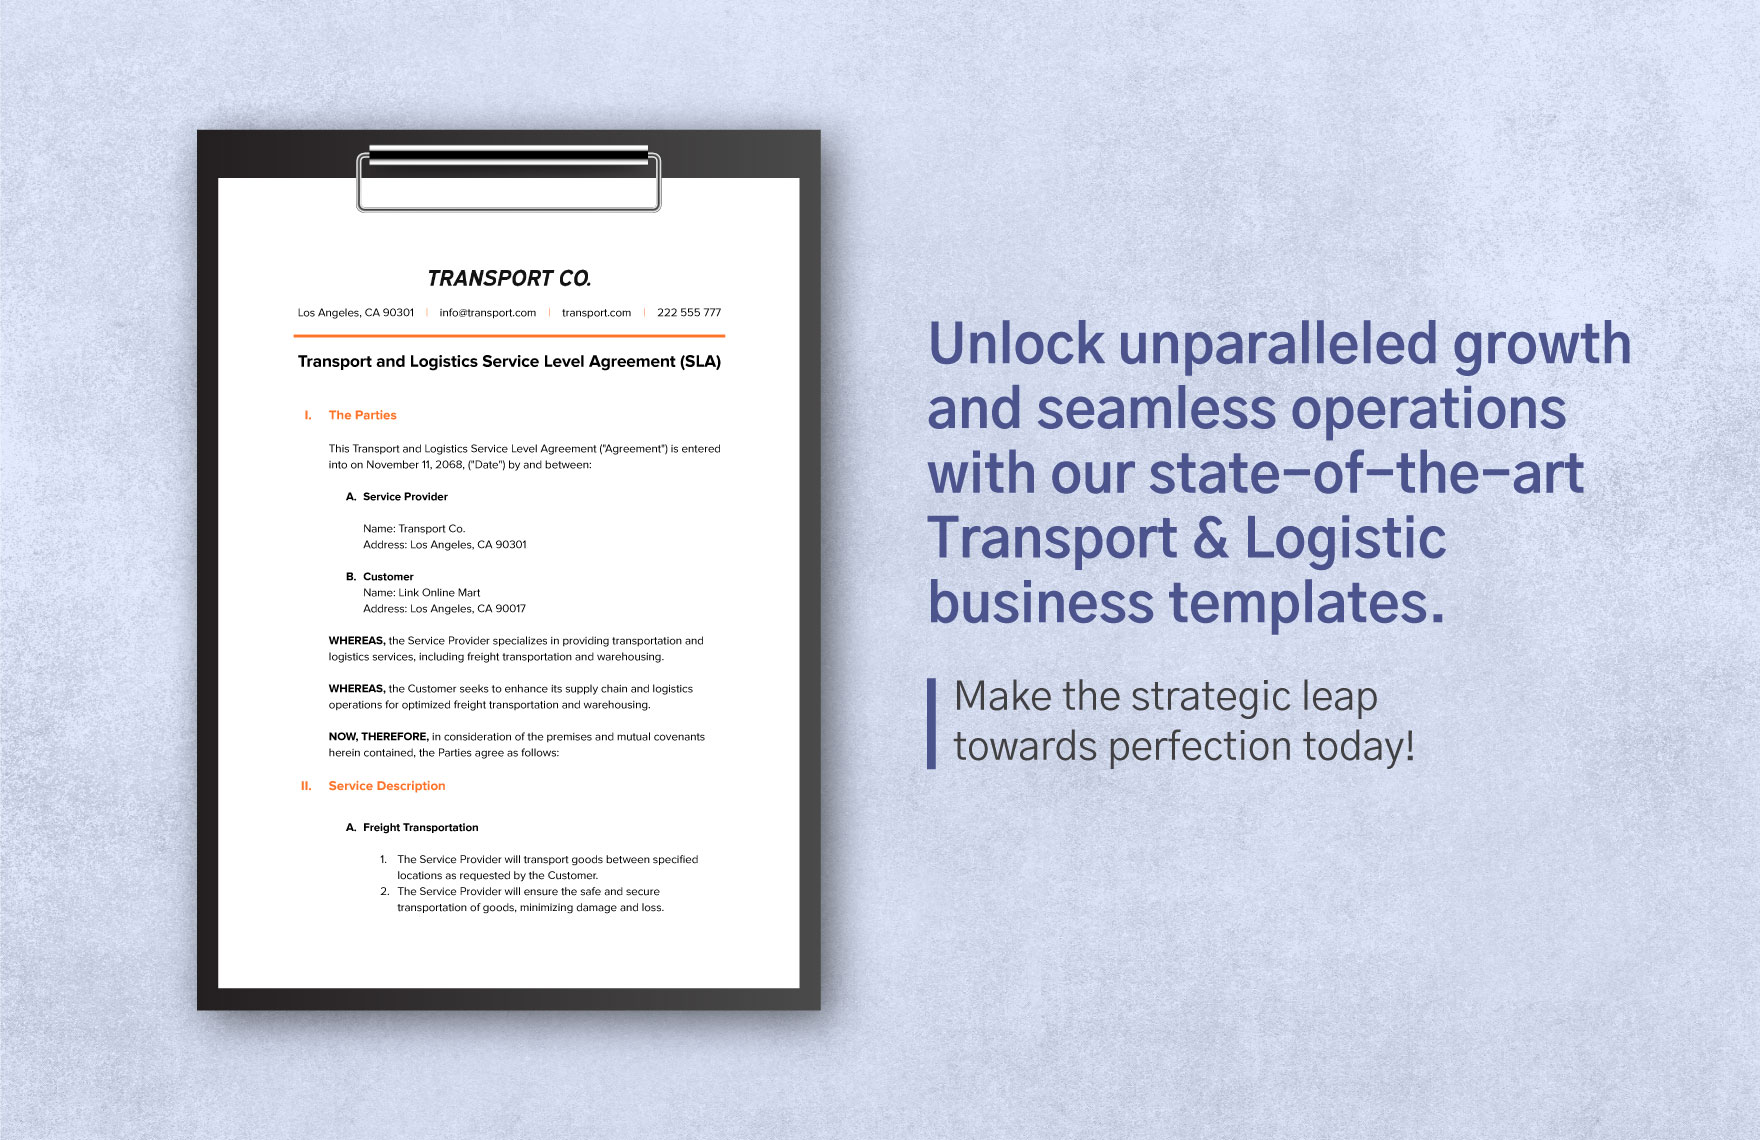 Transport and Logistics Service Level Agreement (SLA) Template